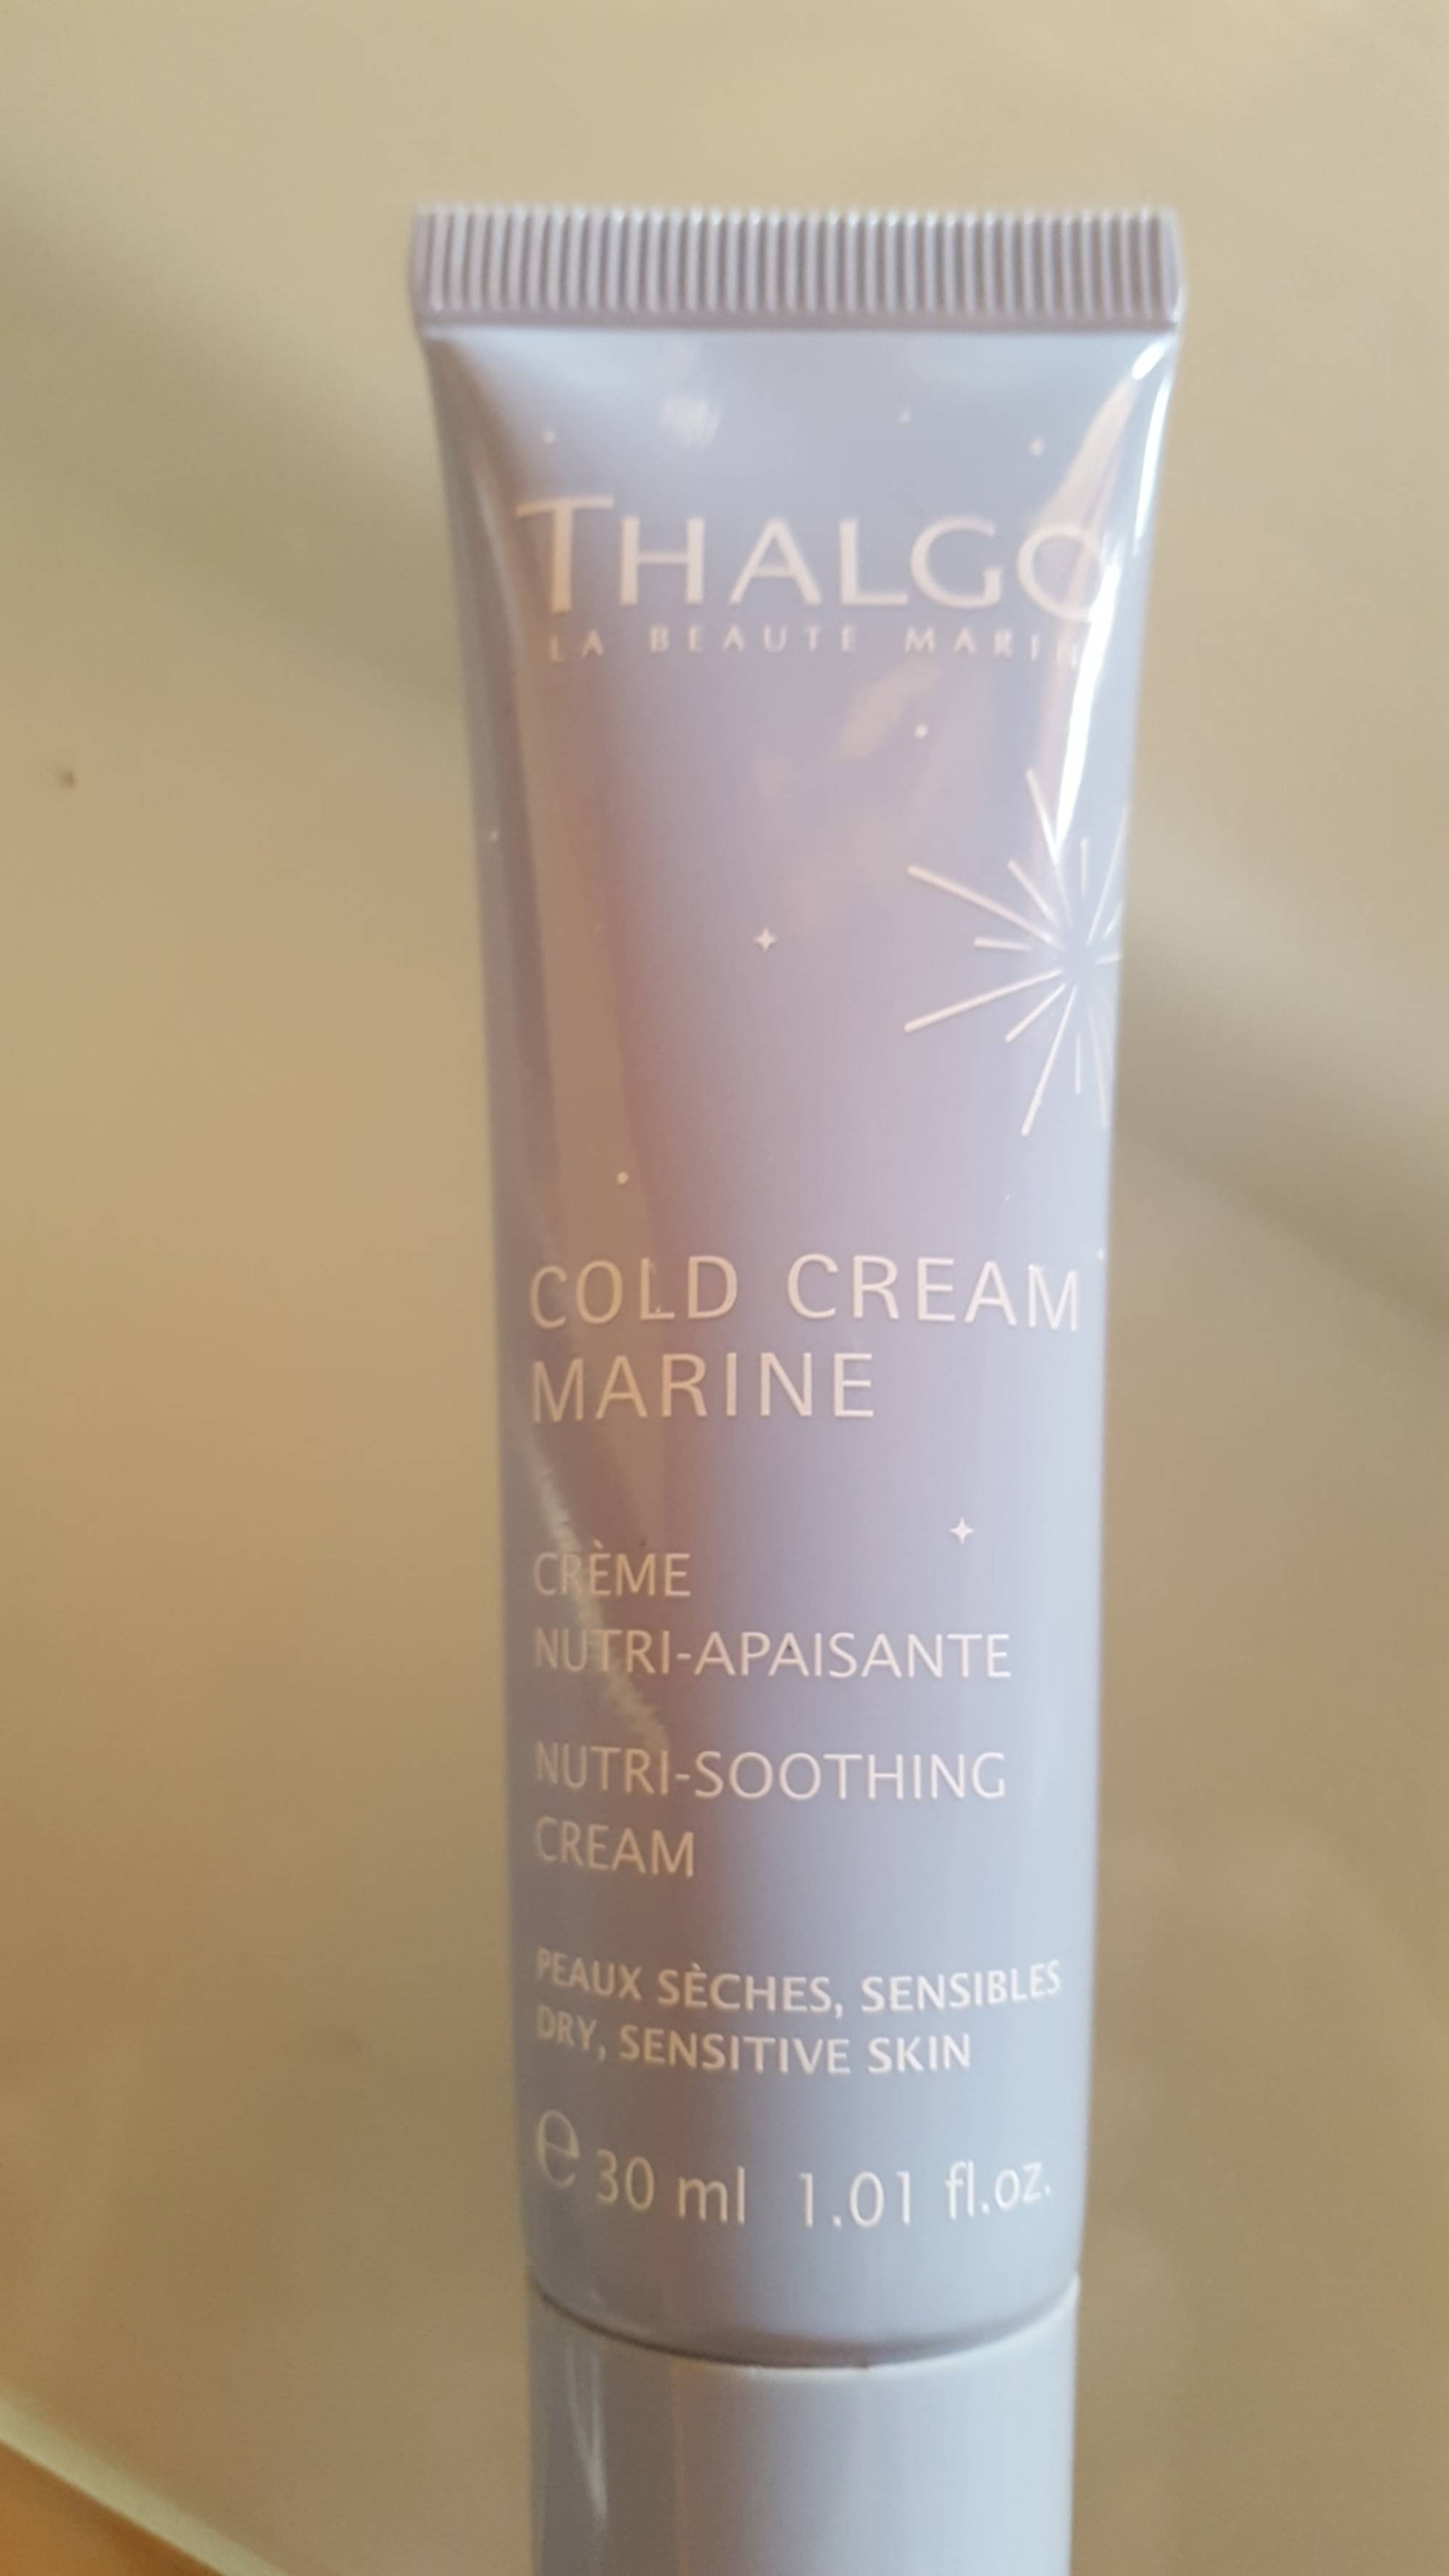 THALGO - Cold cream marine - Crème nutri apaisante